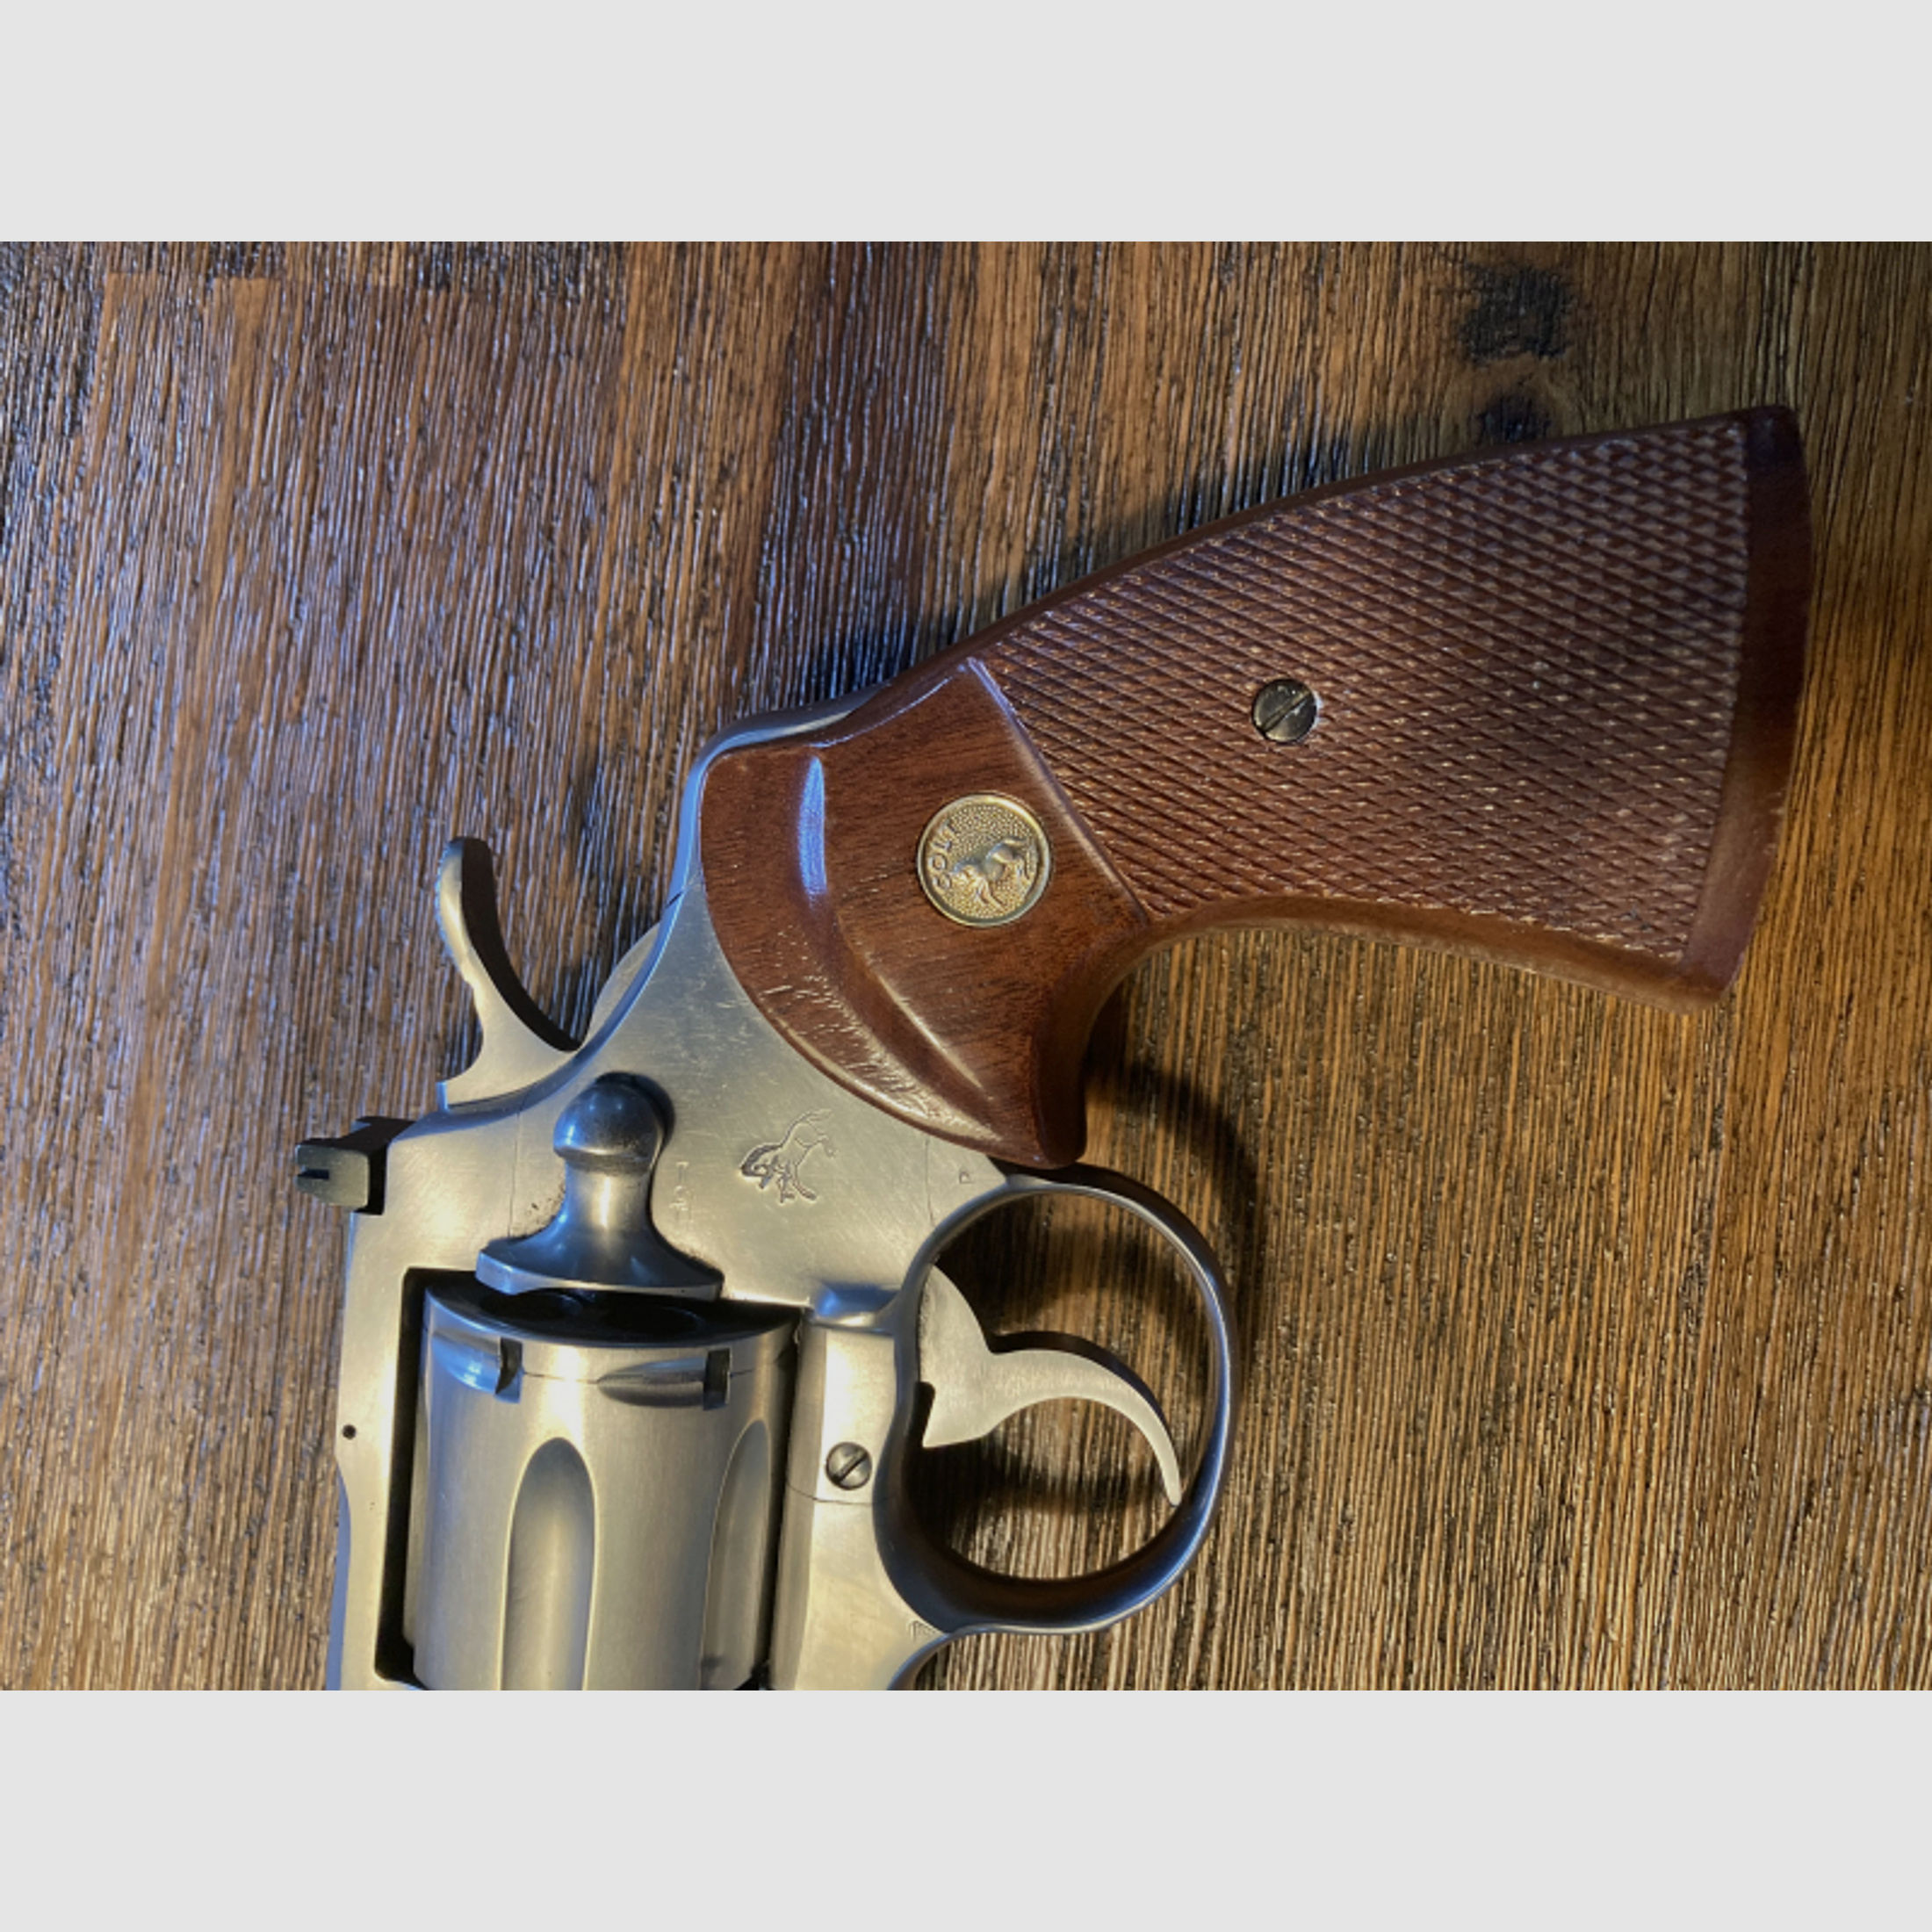 Colt Python .357 Magnum Stainless Steel